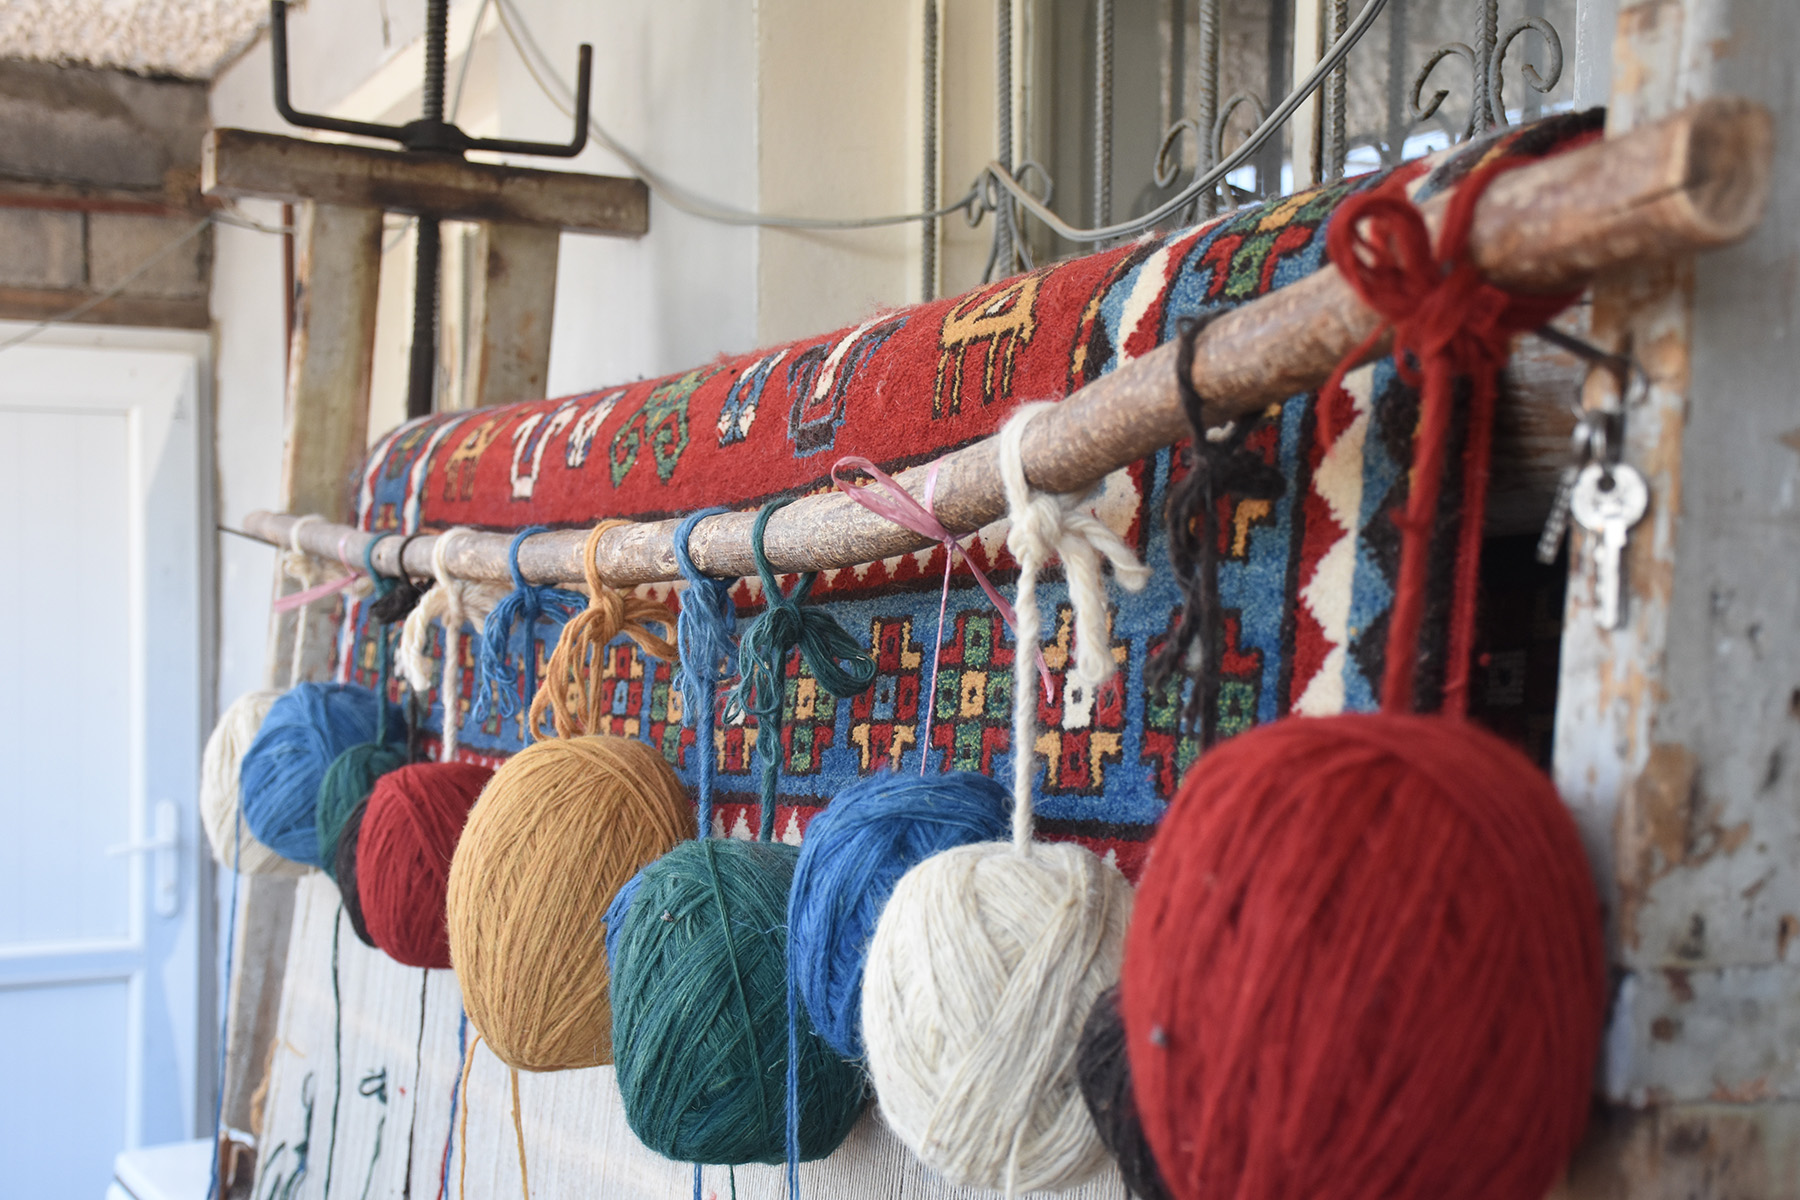 Yarn used for carpet-making. Photo: Tata Shoshiashvili/OC Media. 
